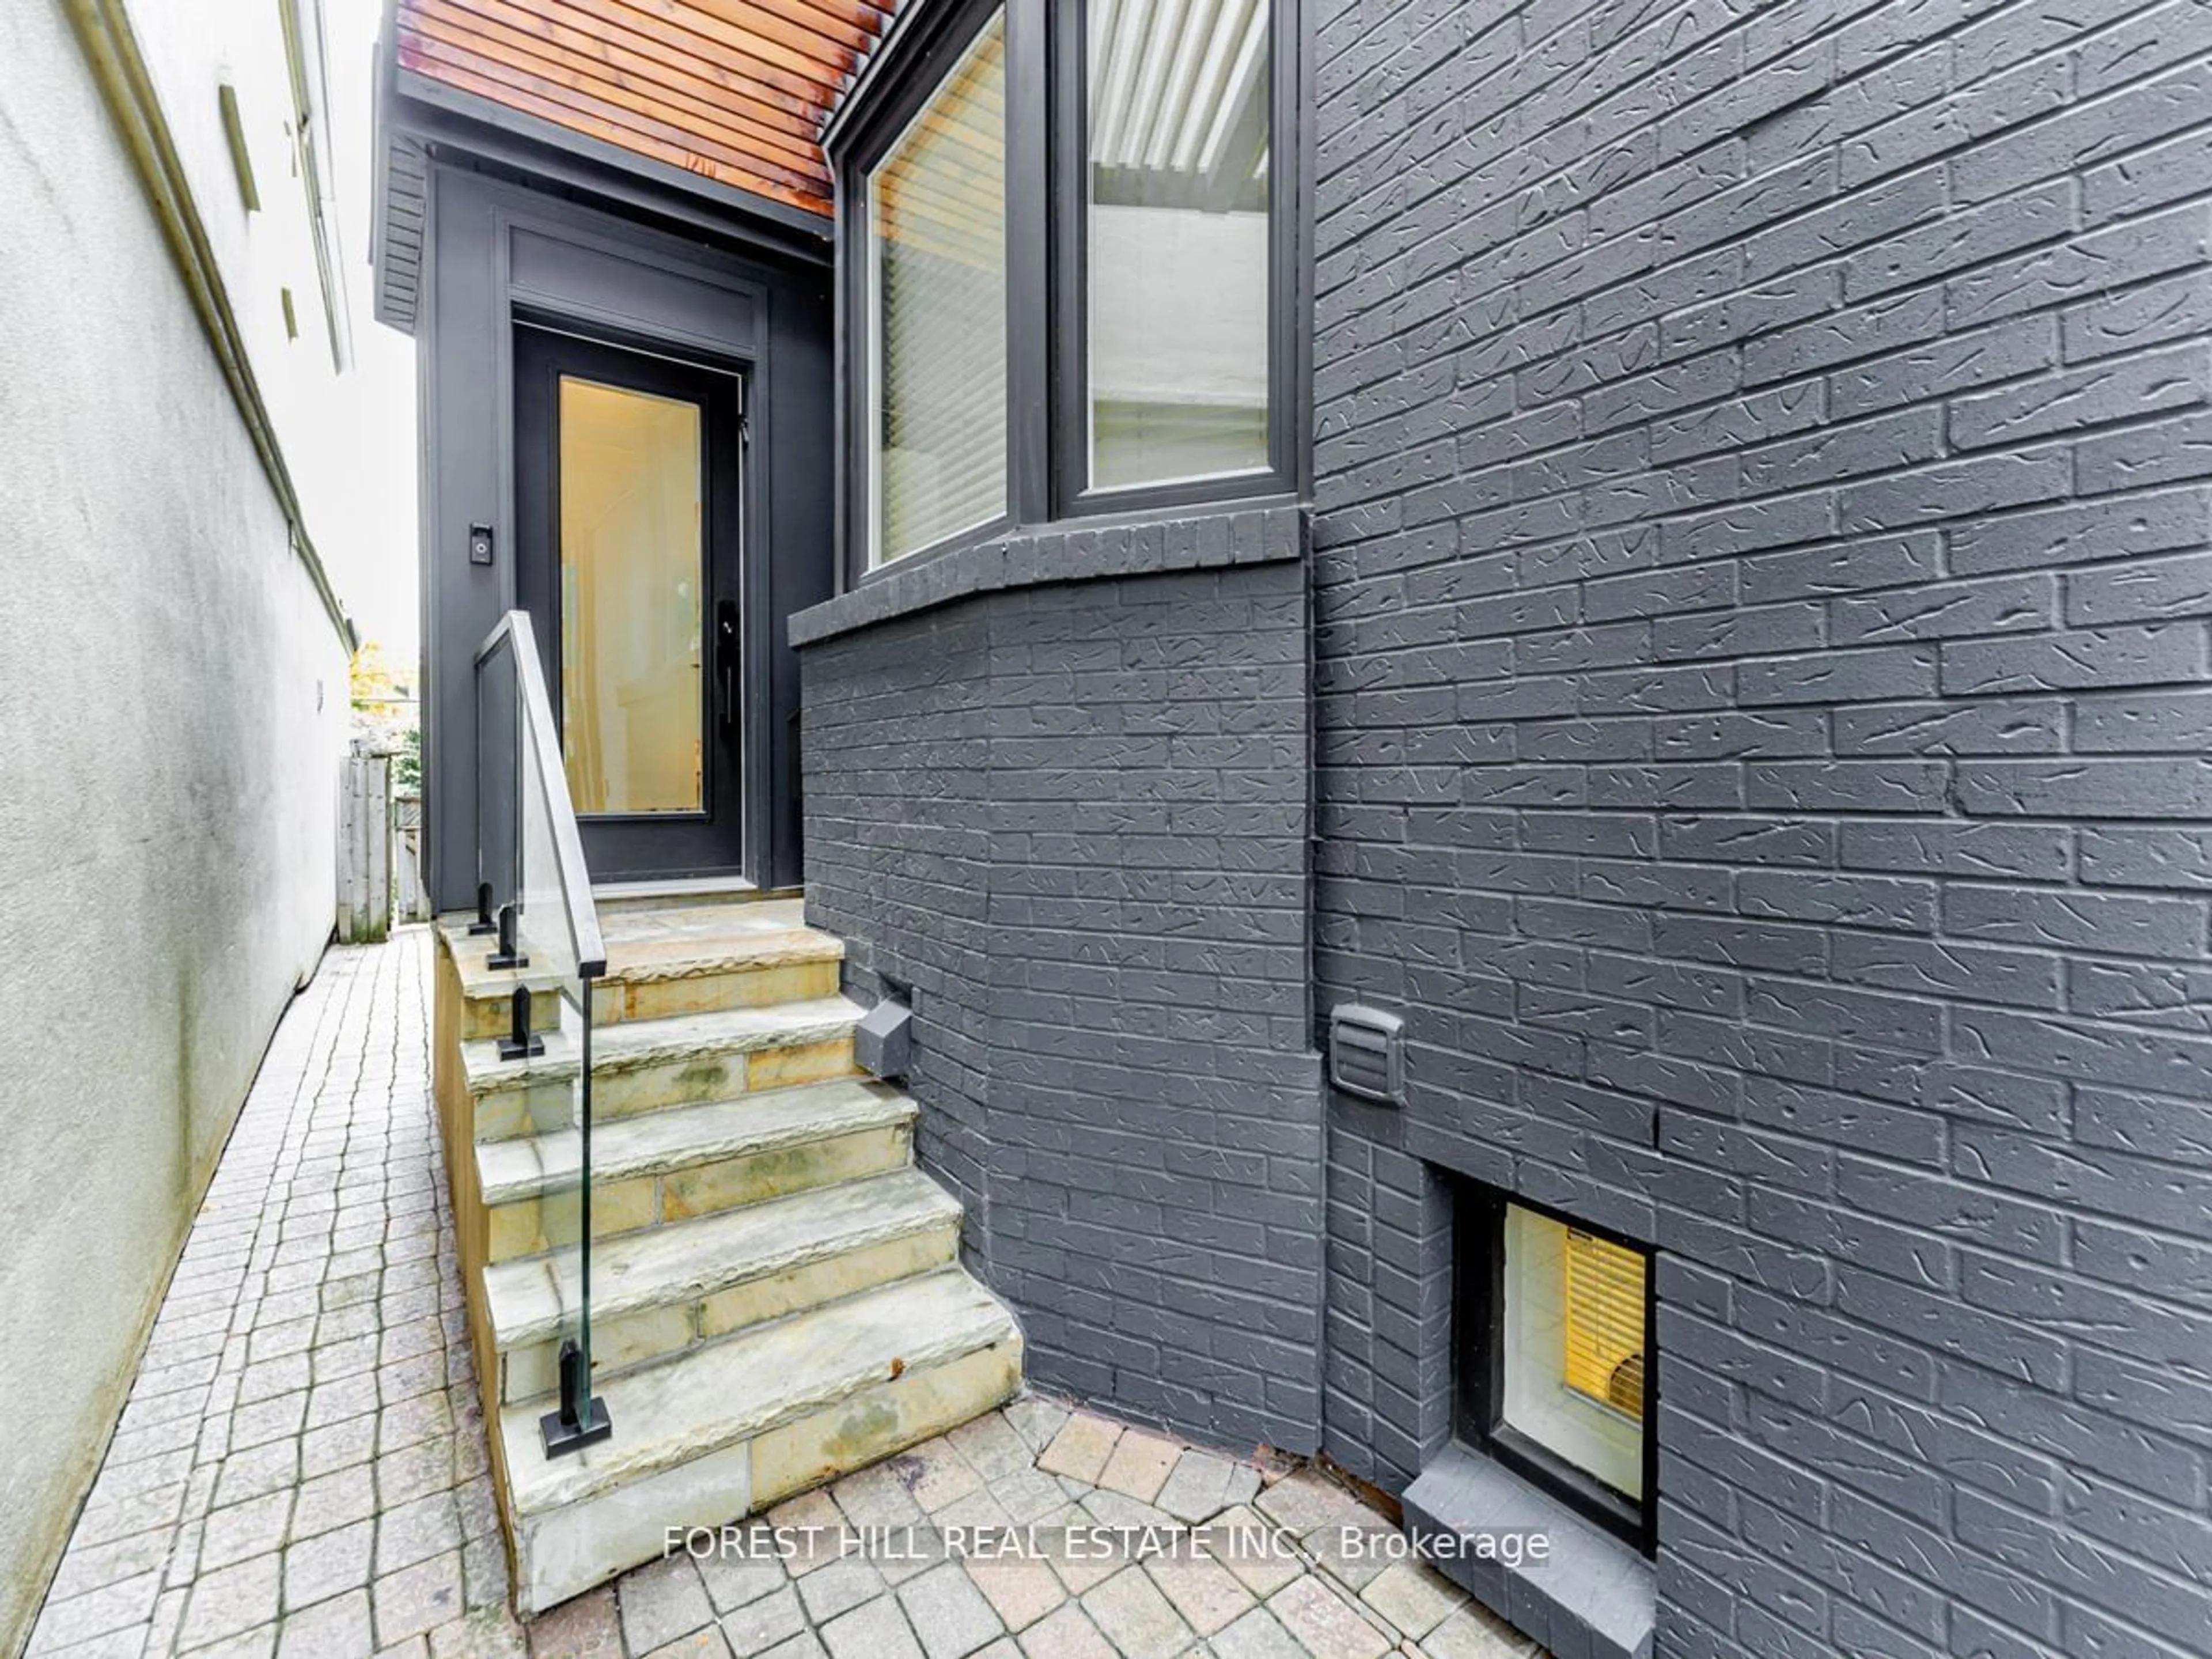 Home with brick exterior material for 35 Balmoral Ave, Toronto Ontario M4V 1J5